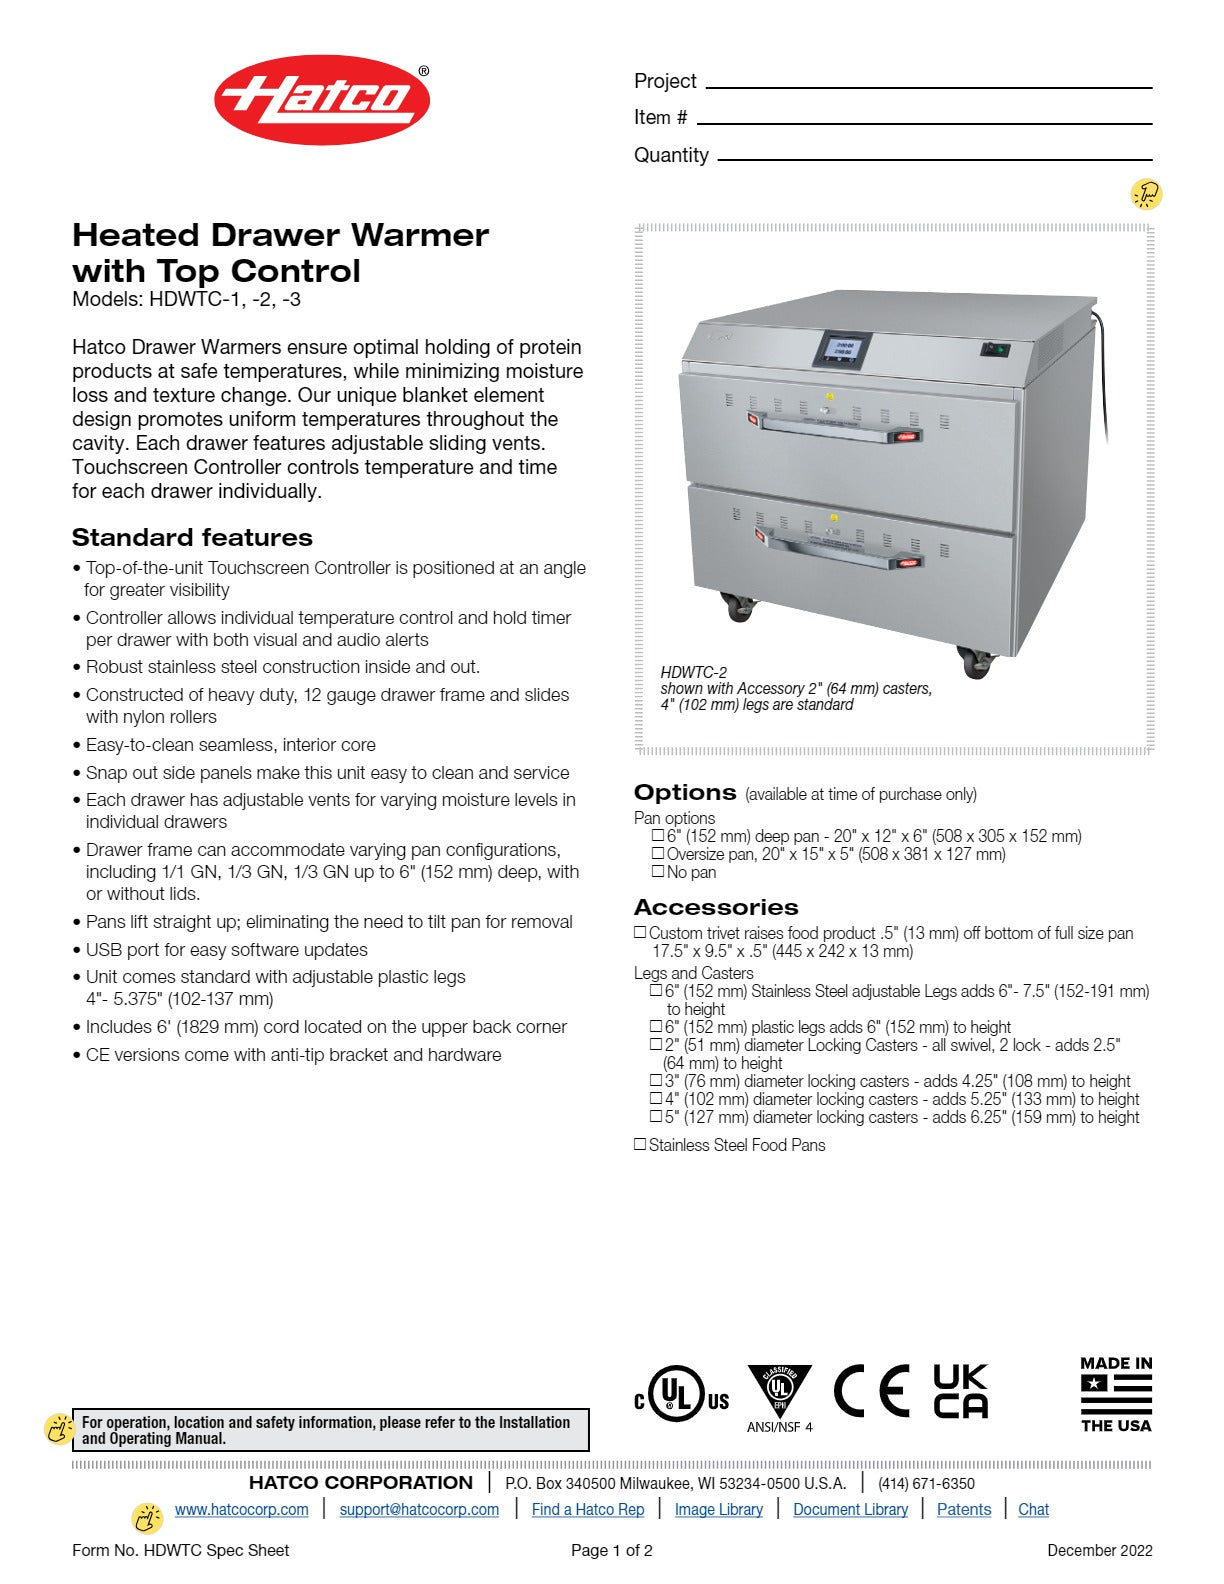 Thumbnail - Hatco HDWTC-2 - Drawer Warmer